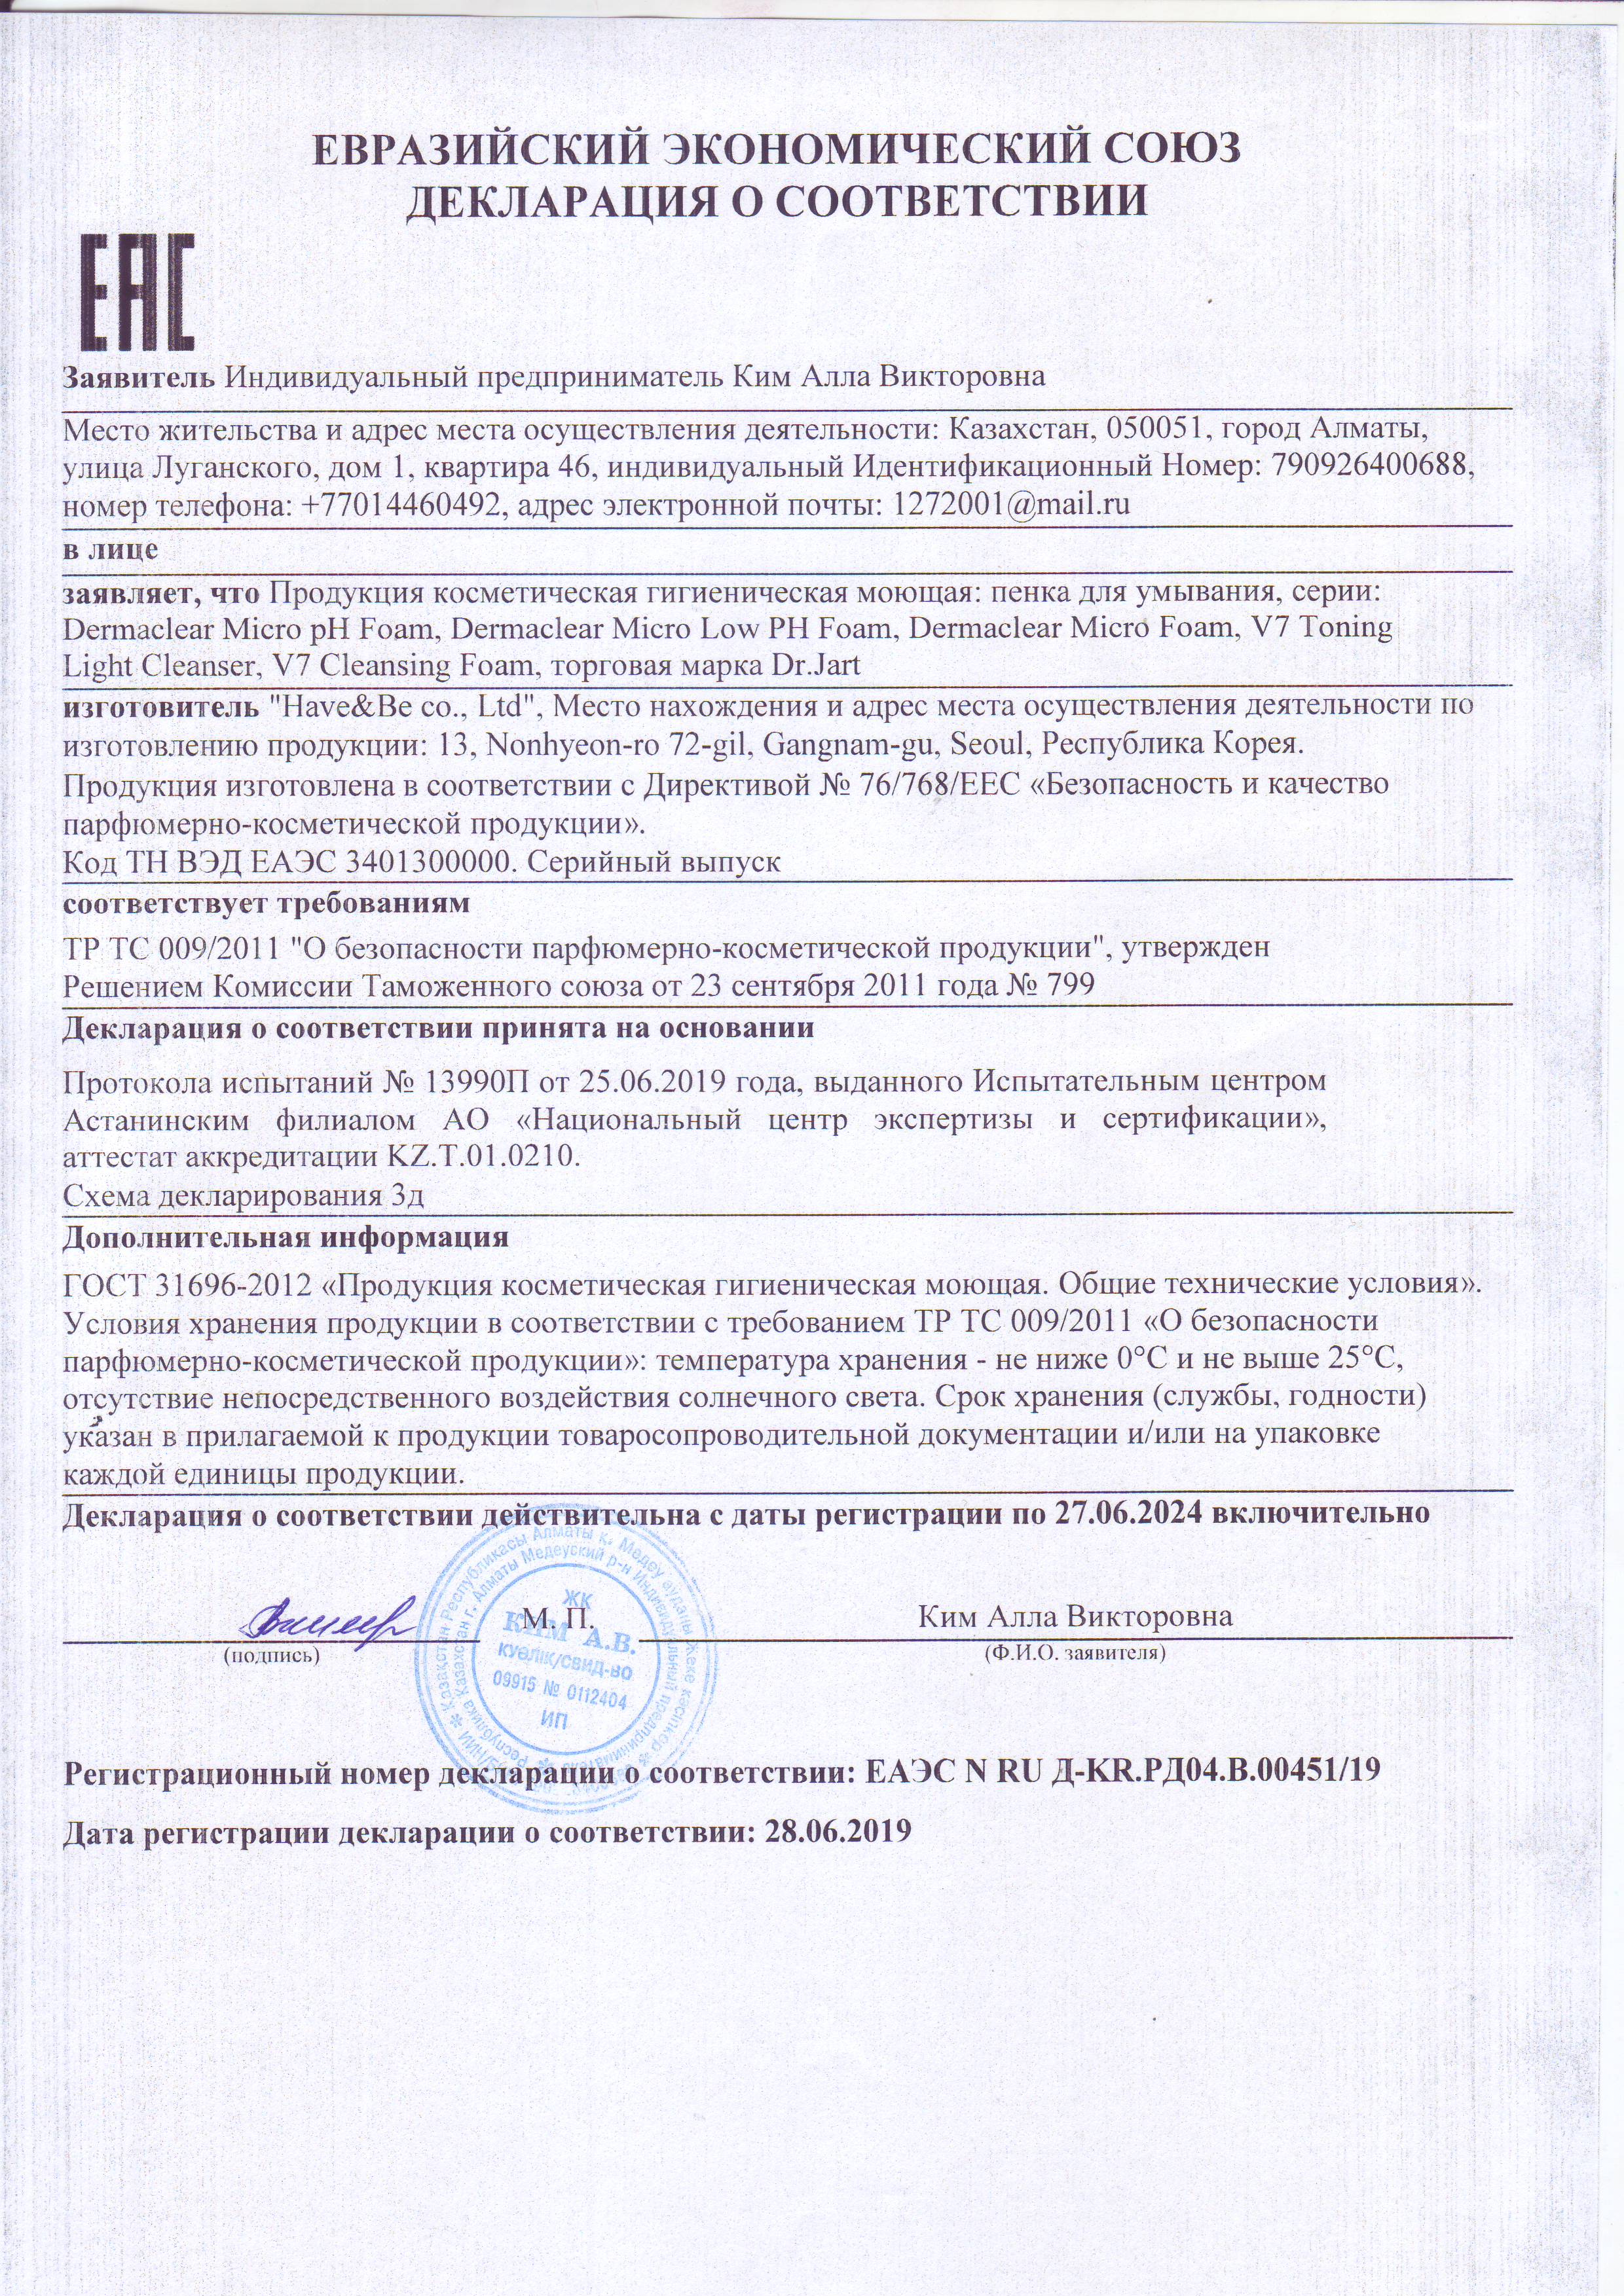 сертификат др джарт 2